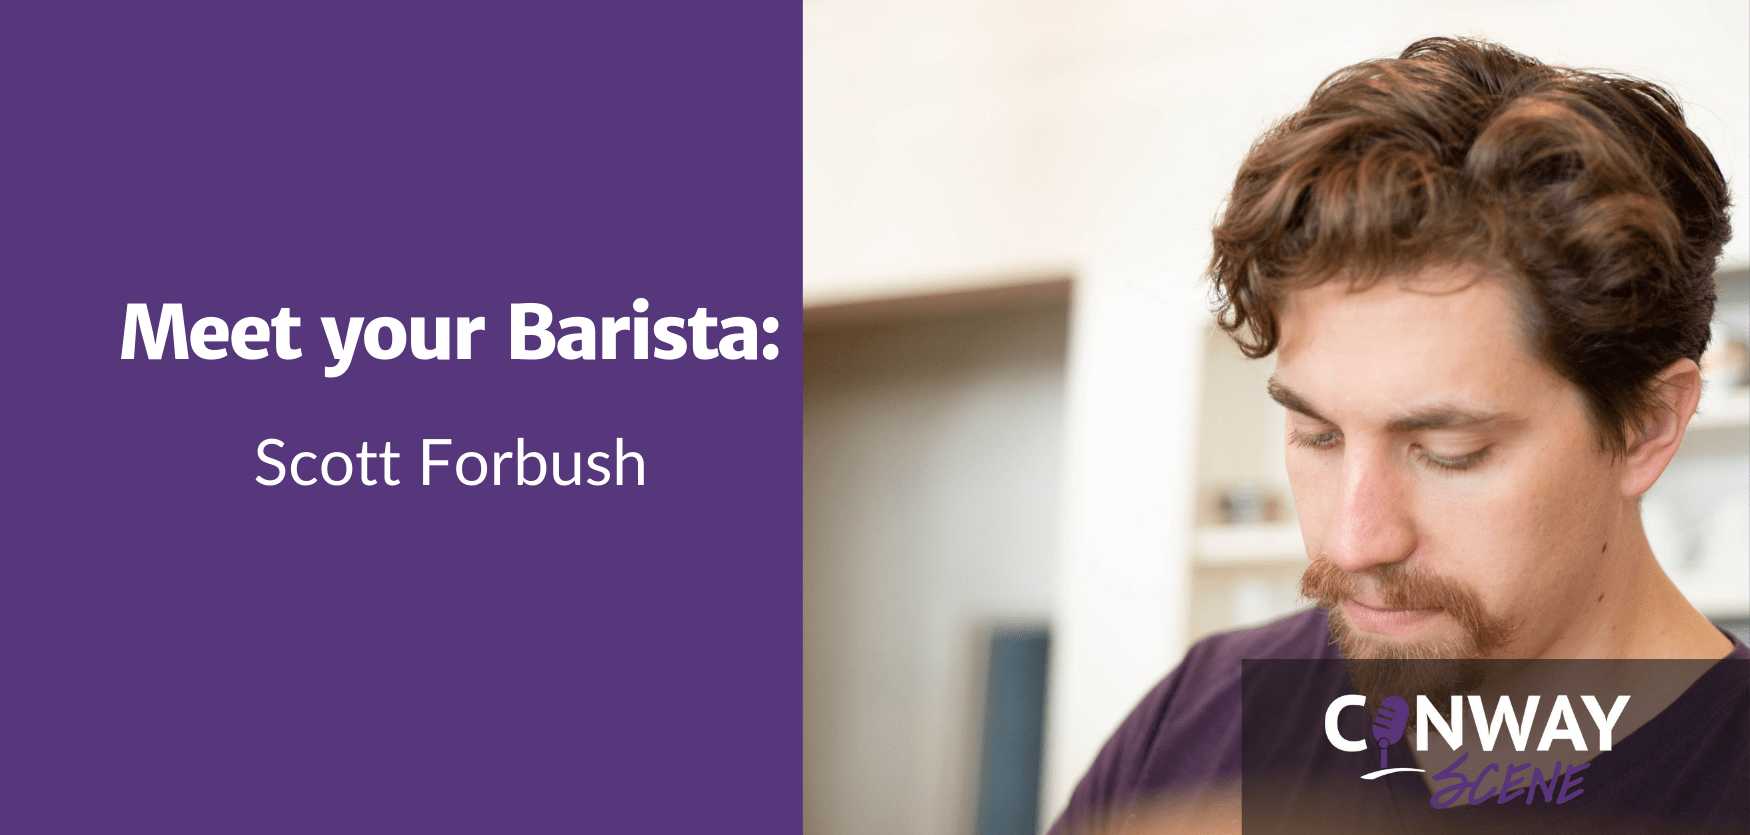 Meet your Barista Scott Forbush